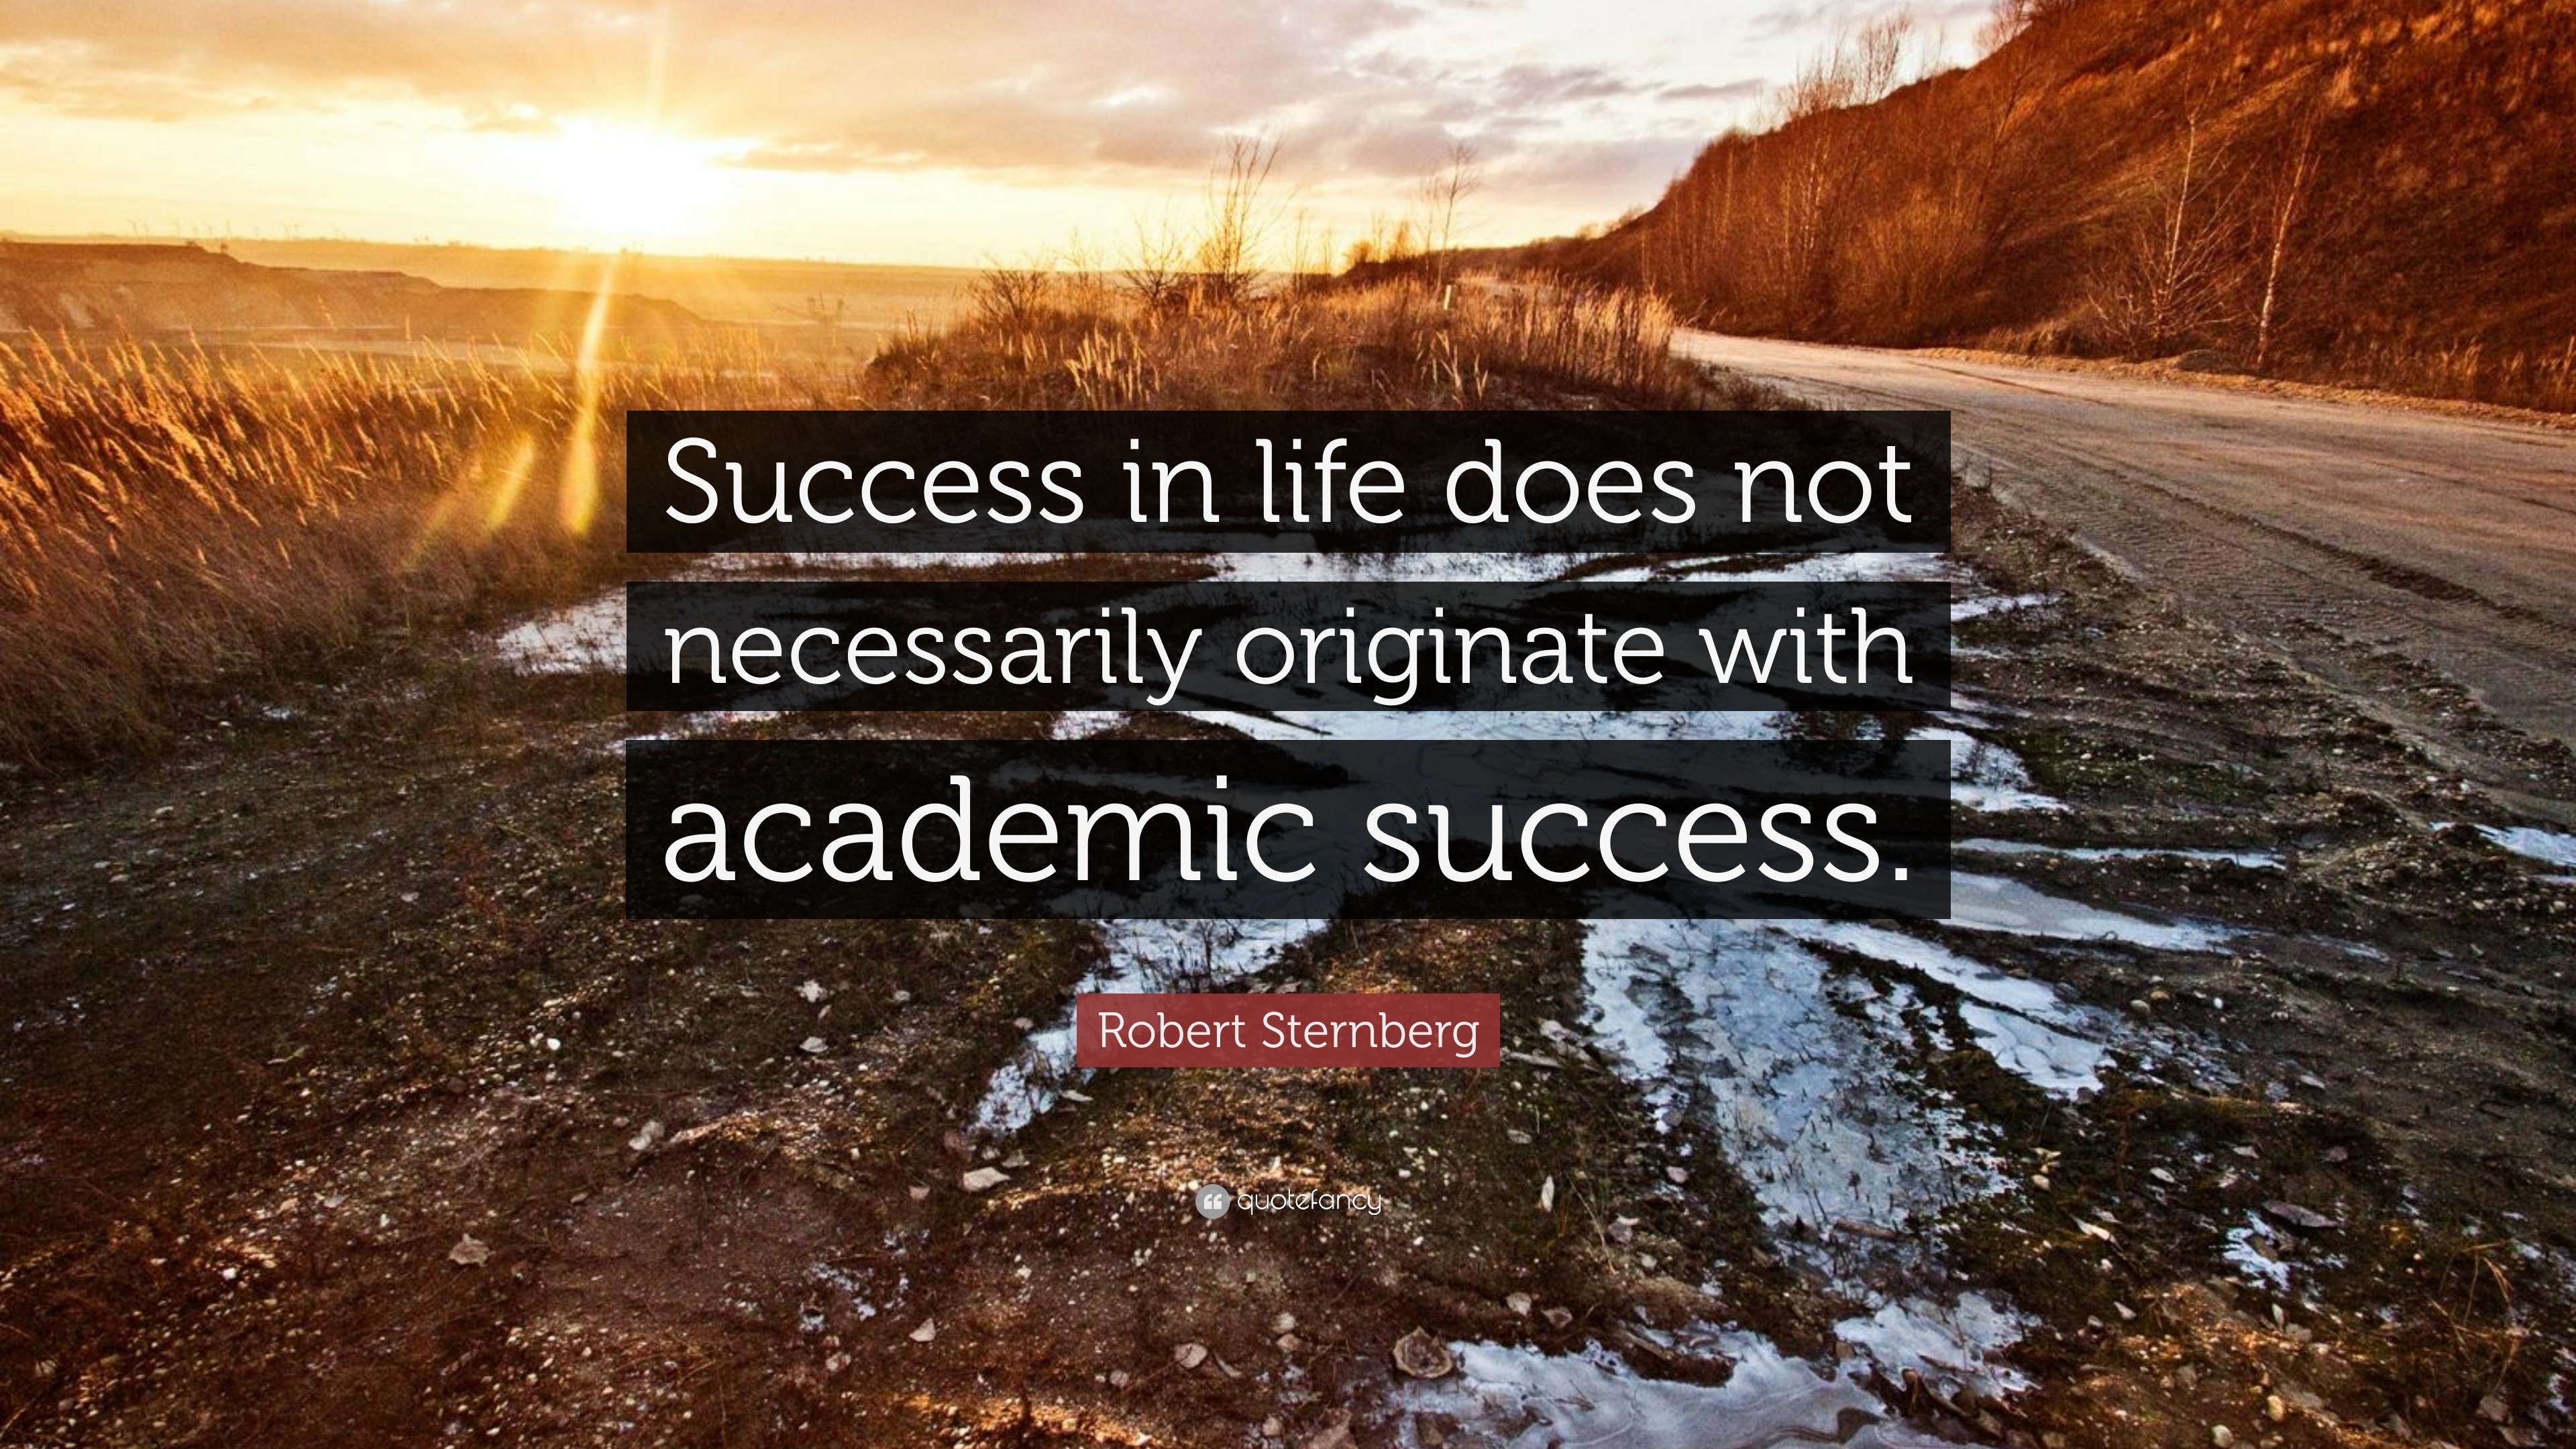 academic achievement quotes